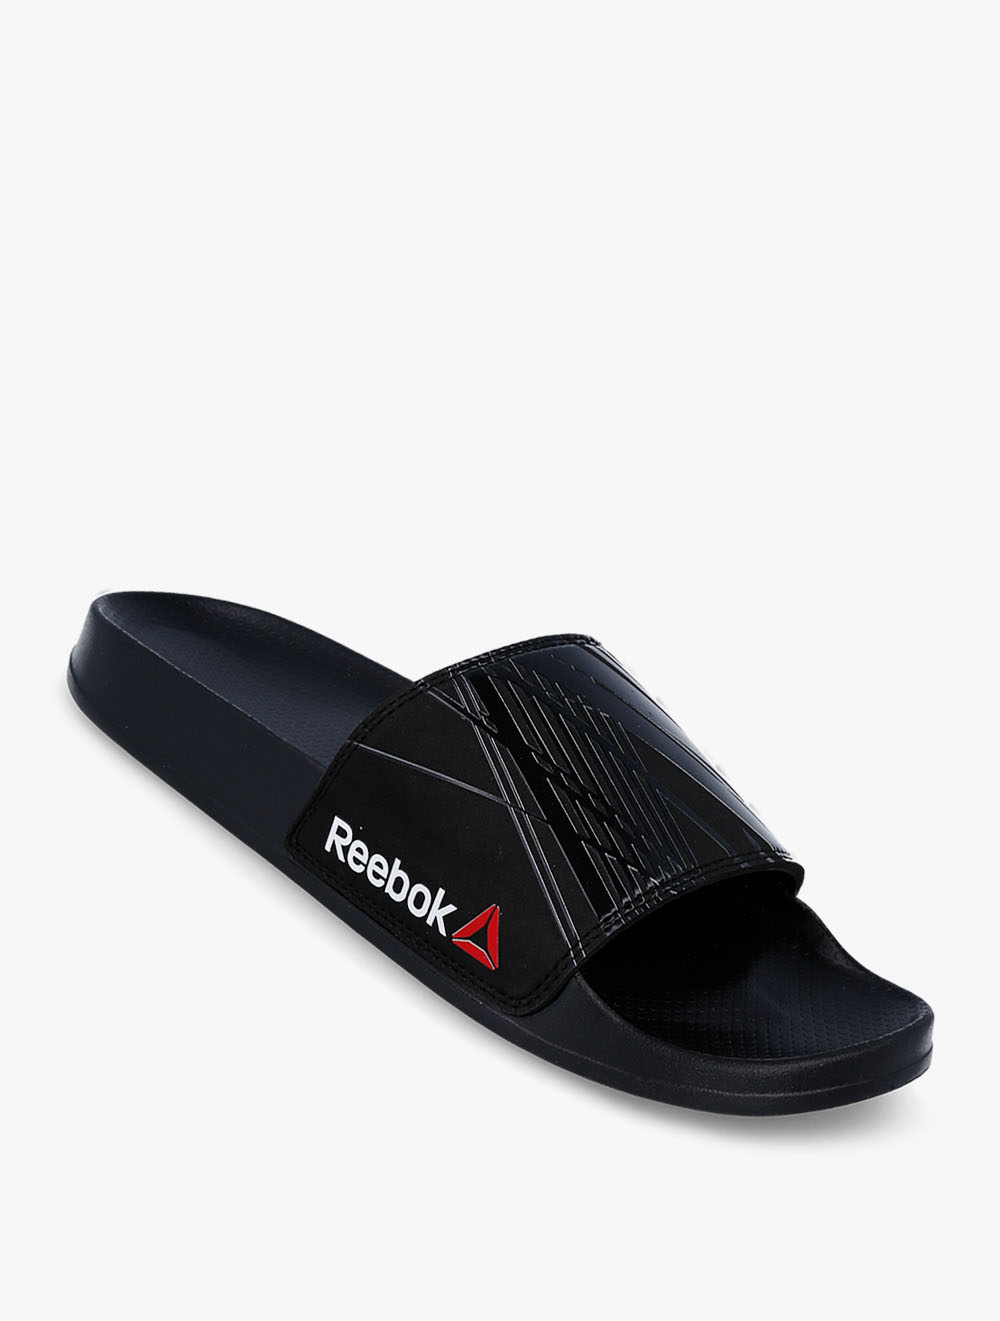 Selling - sandal reebok original - OFF 